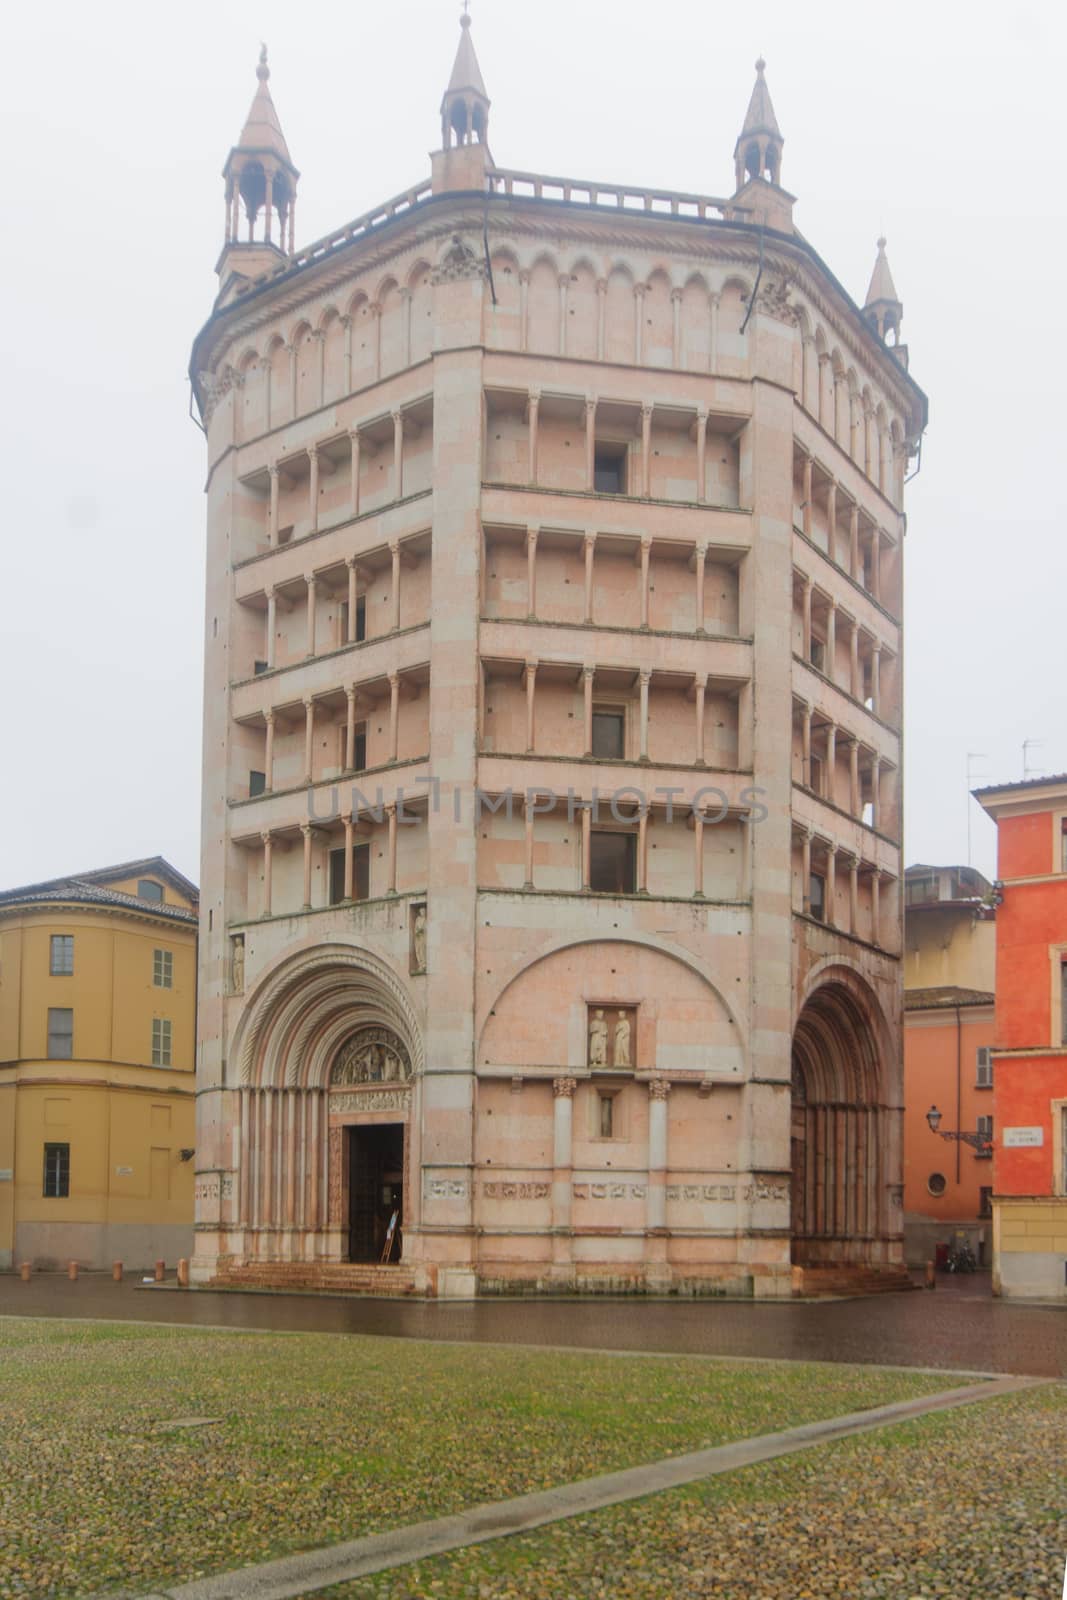 The Baptistery of Parma, Emilia-Romagna, Italy